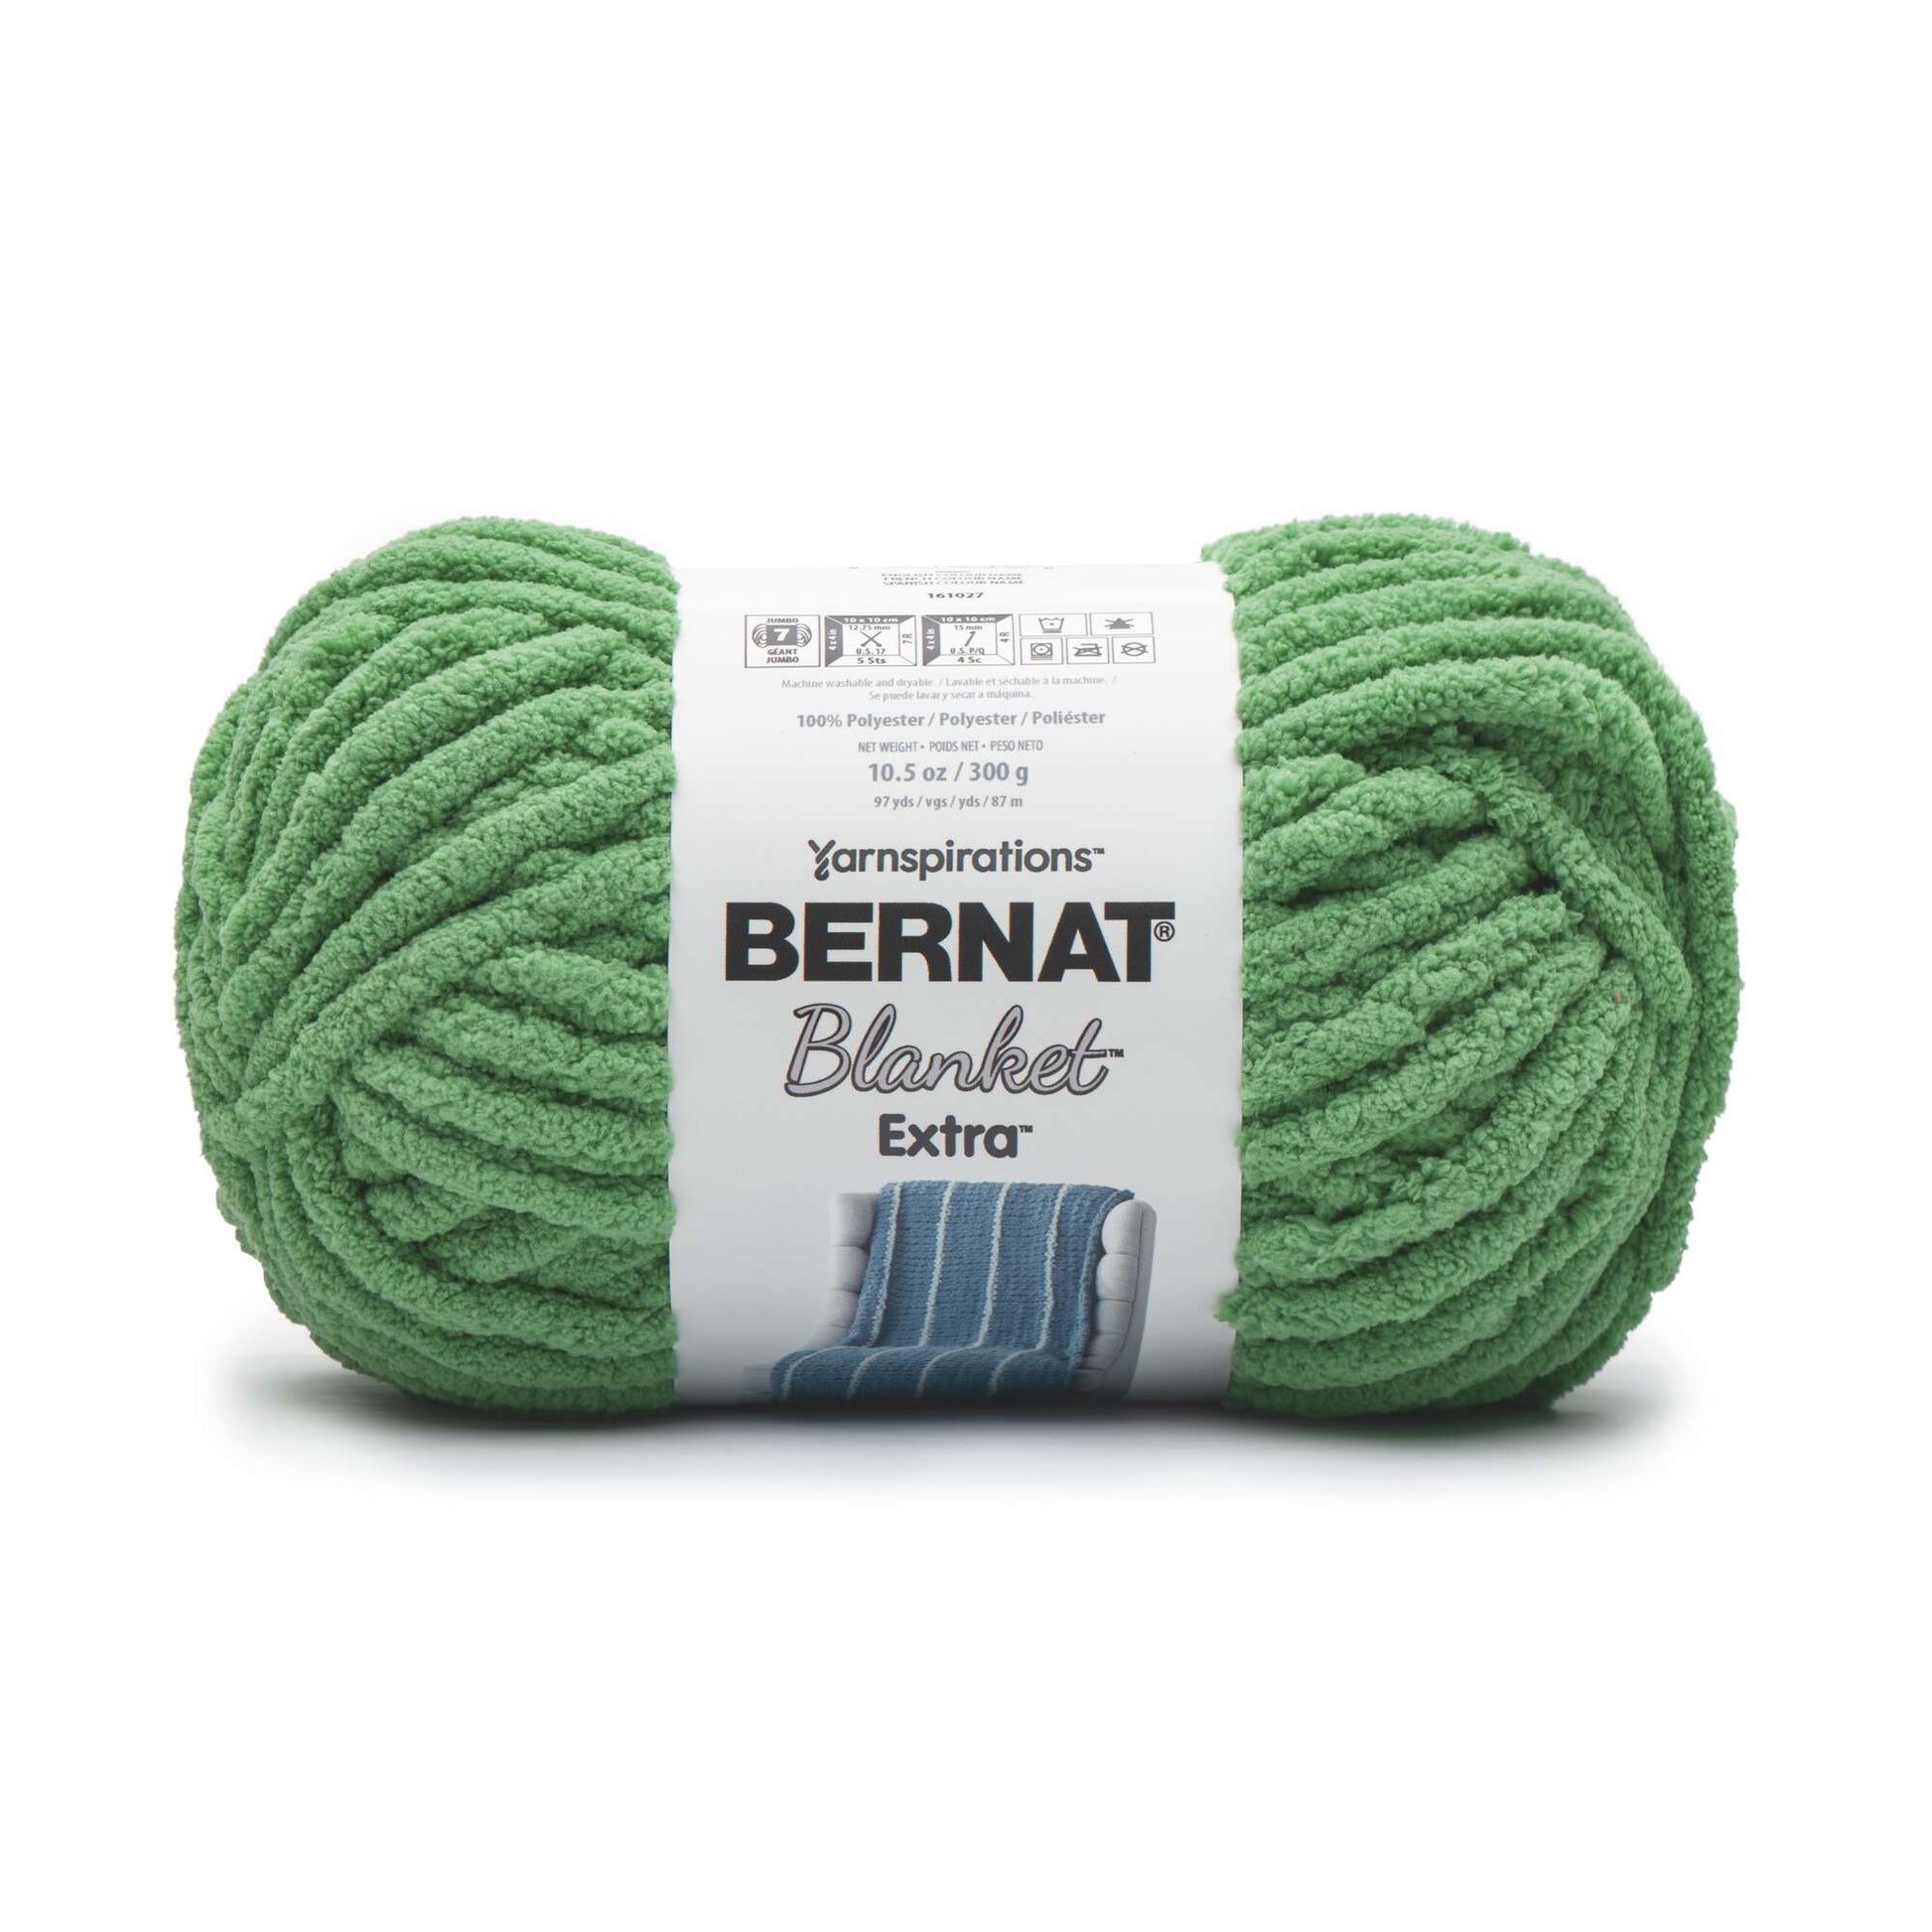 Bernat Blanket Extra Yarn (300g/10.5oz) - Clearance Shades* Grass